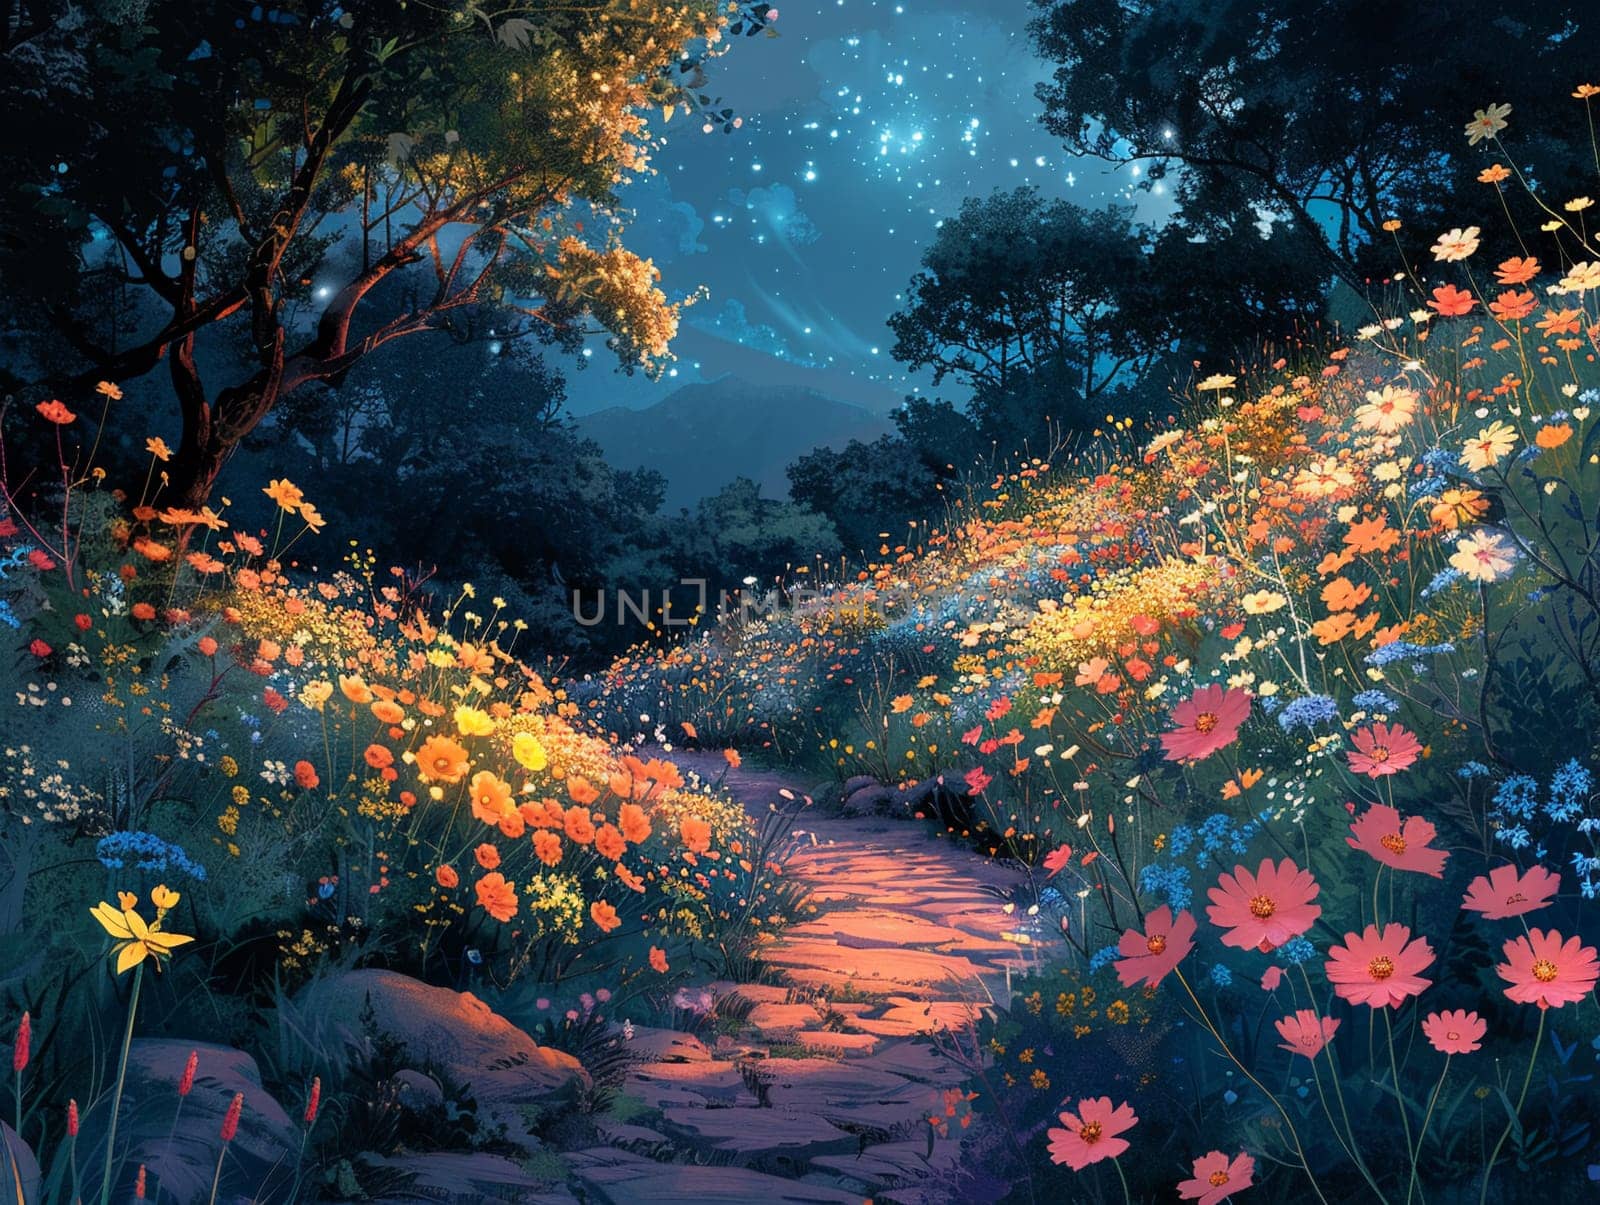 Flower garden at night by Benzoix